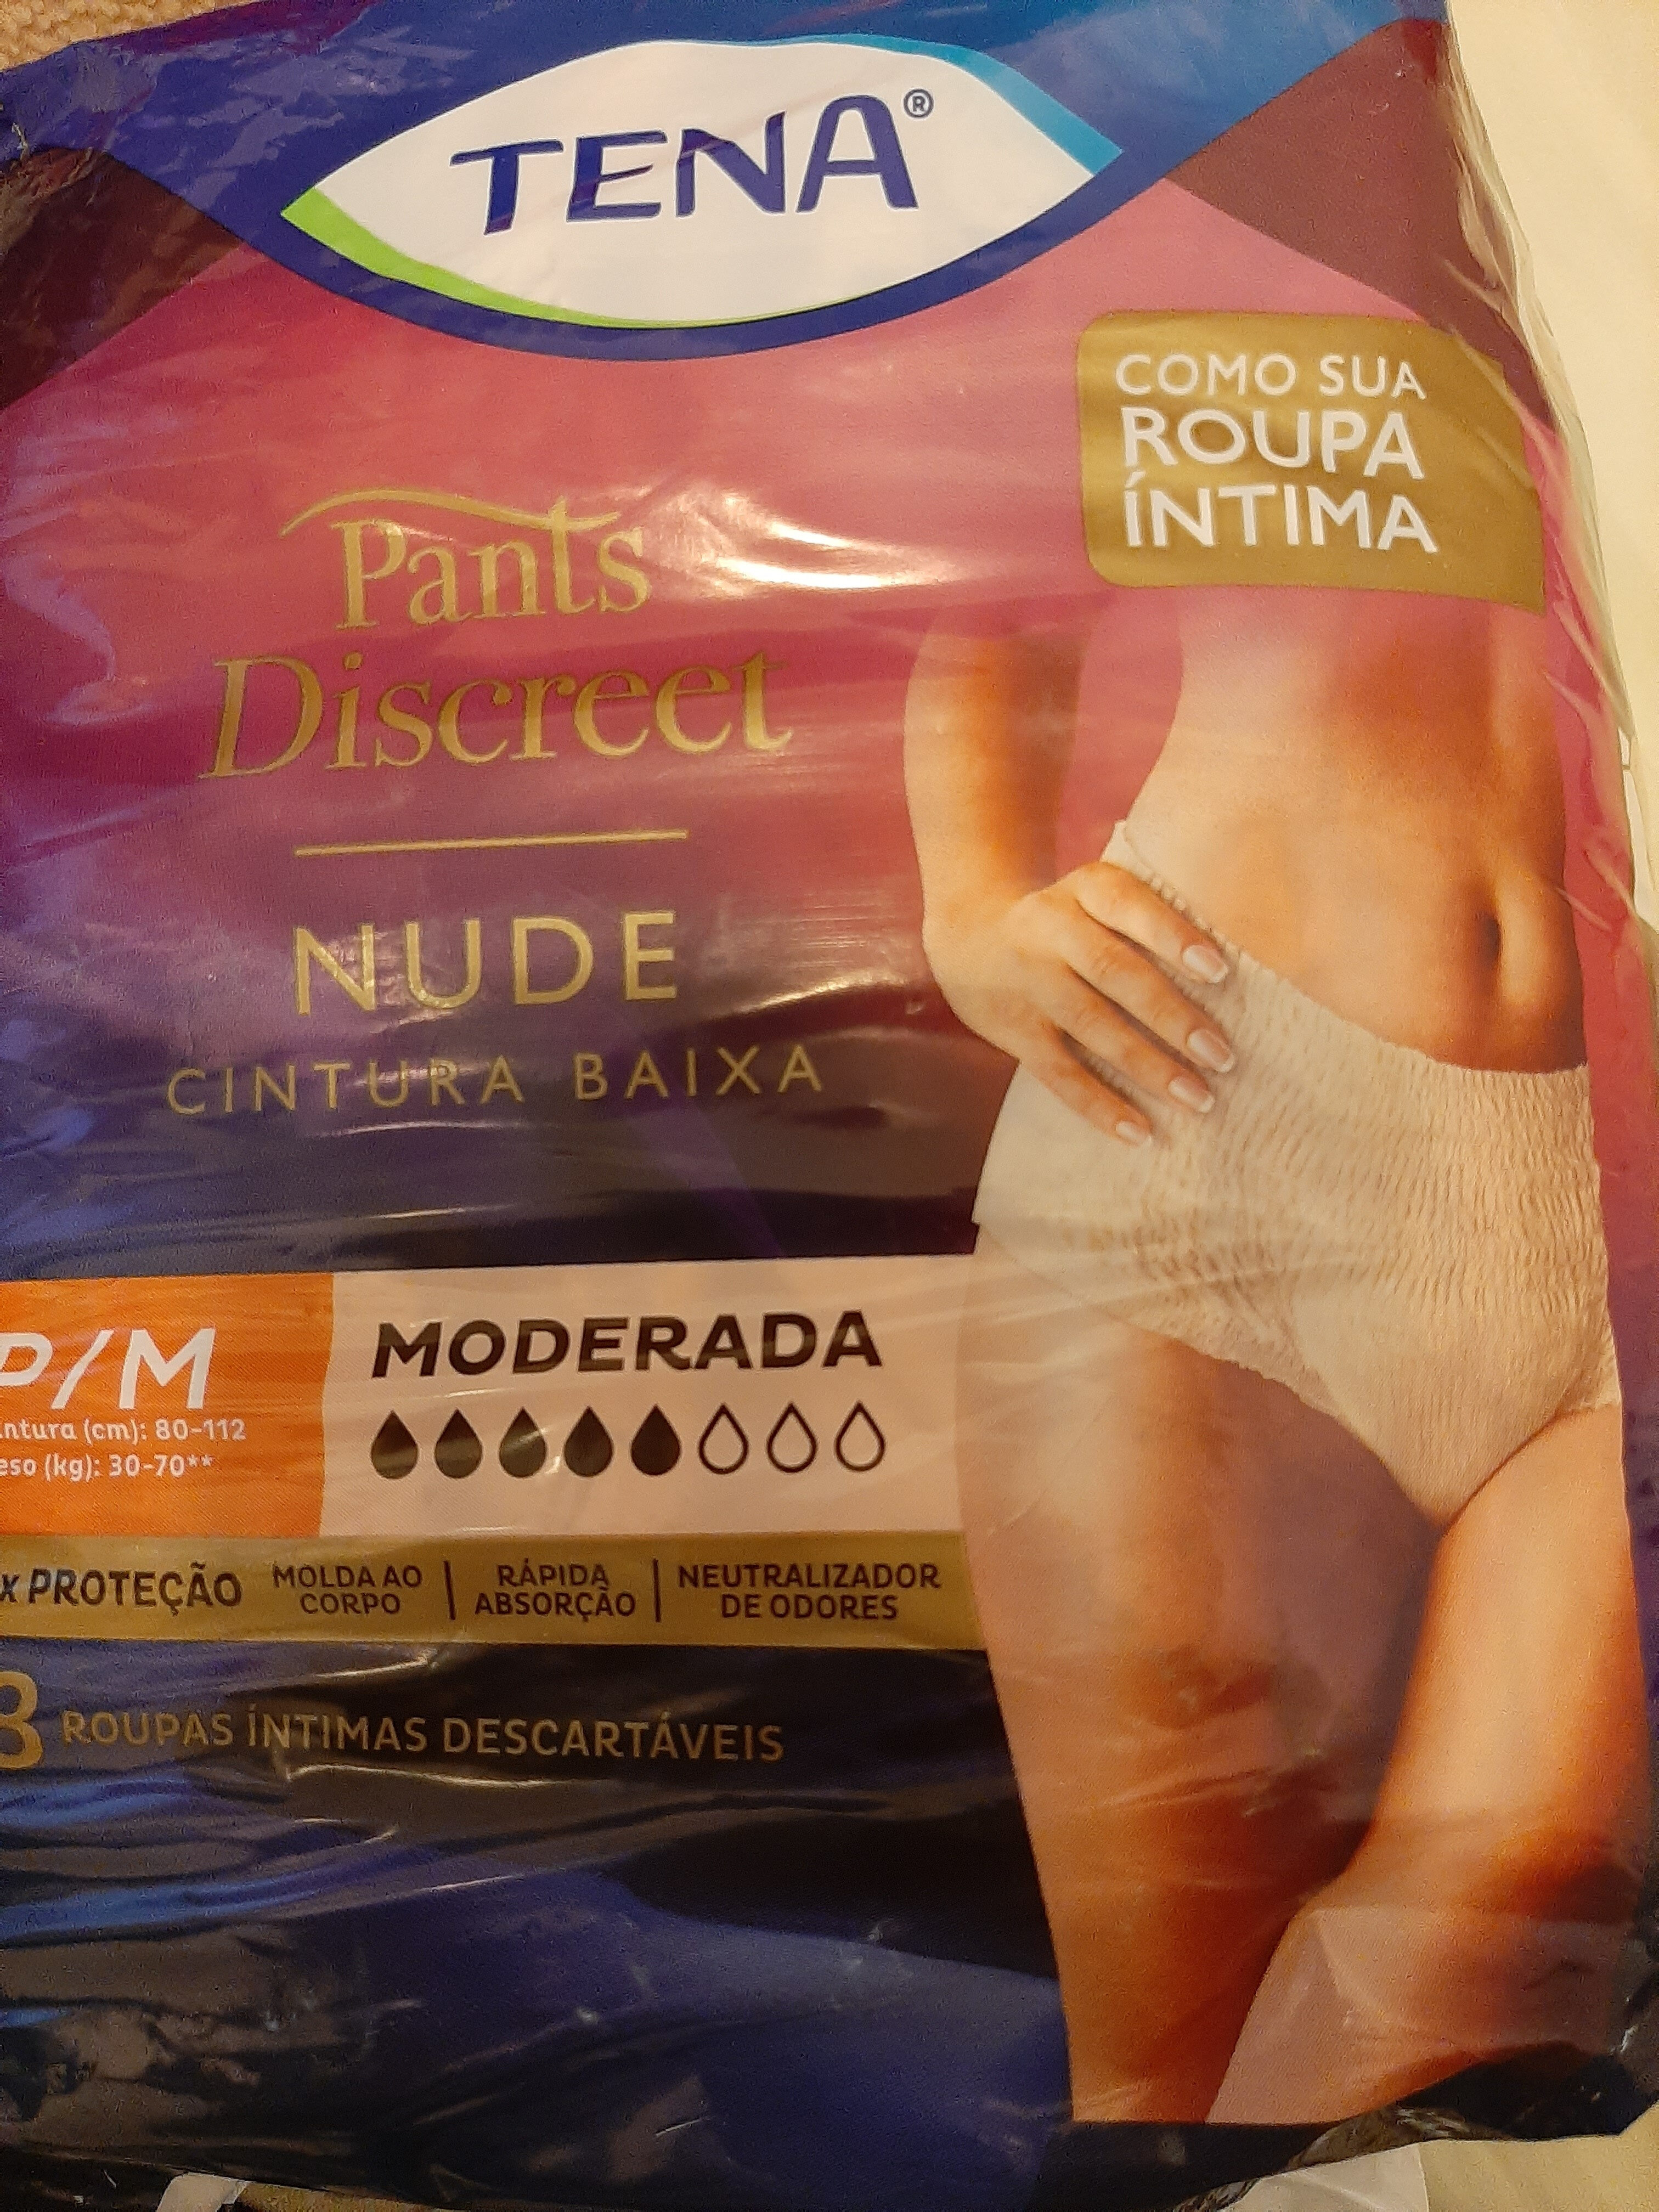 pants discree - Product - pt